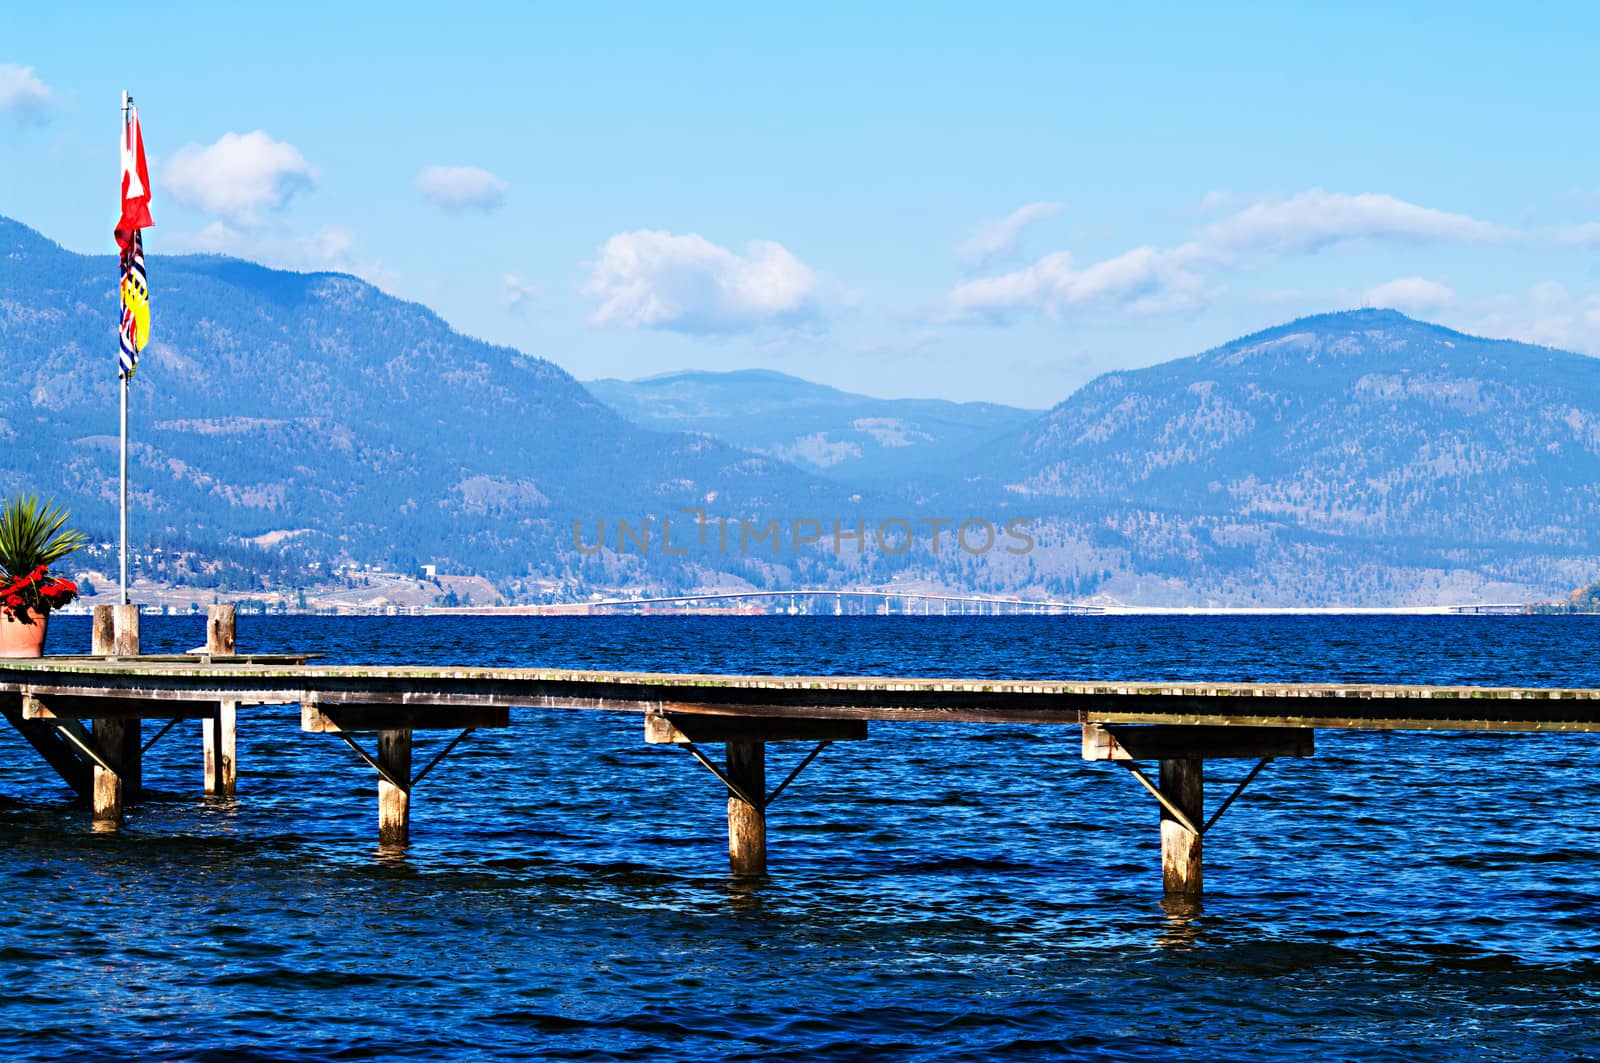 Bridge across Okanagan Lake with Flags